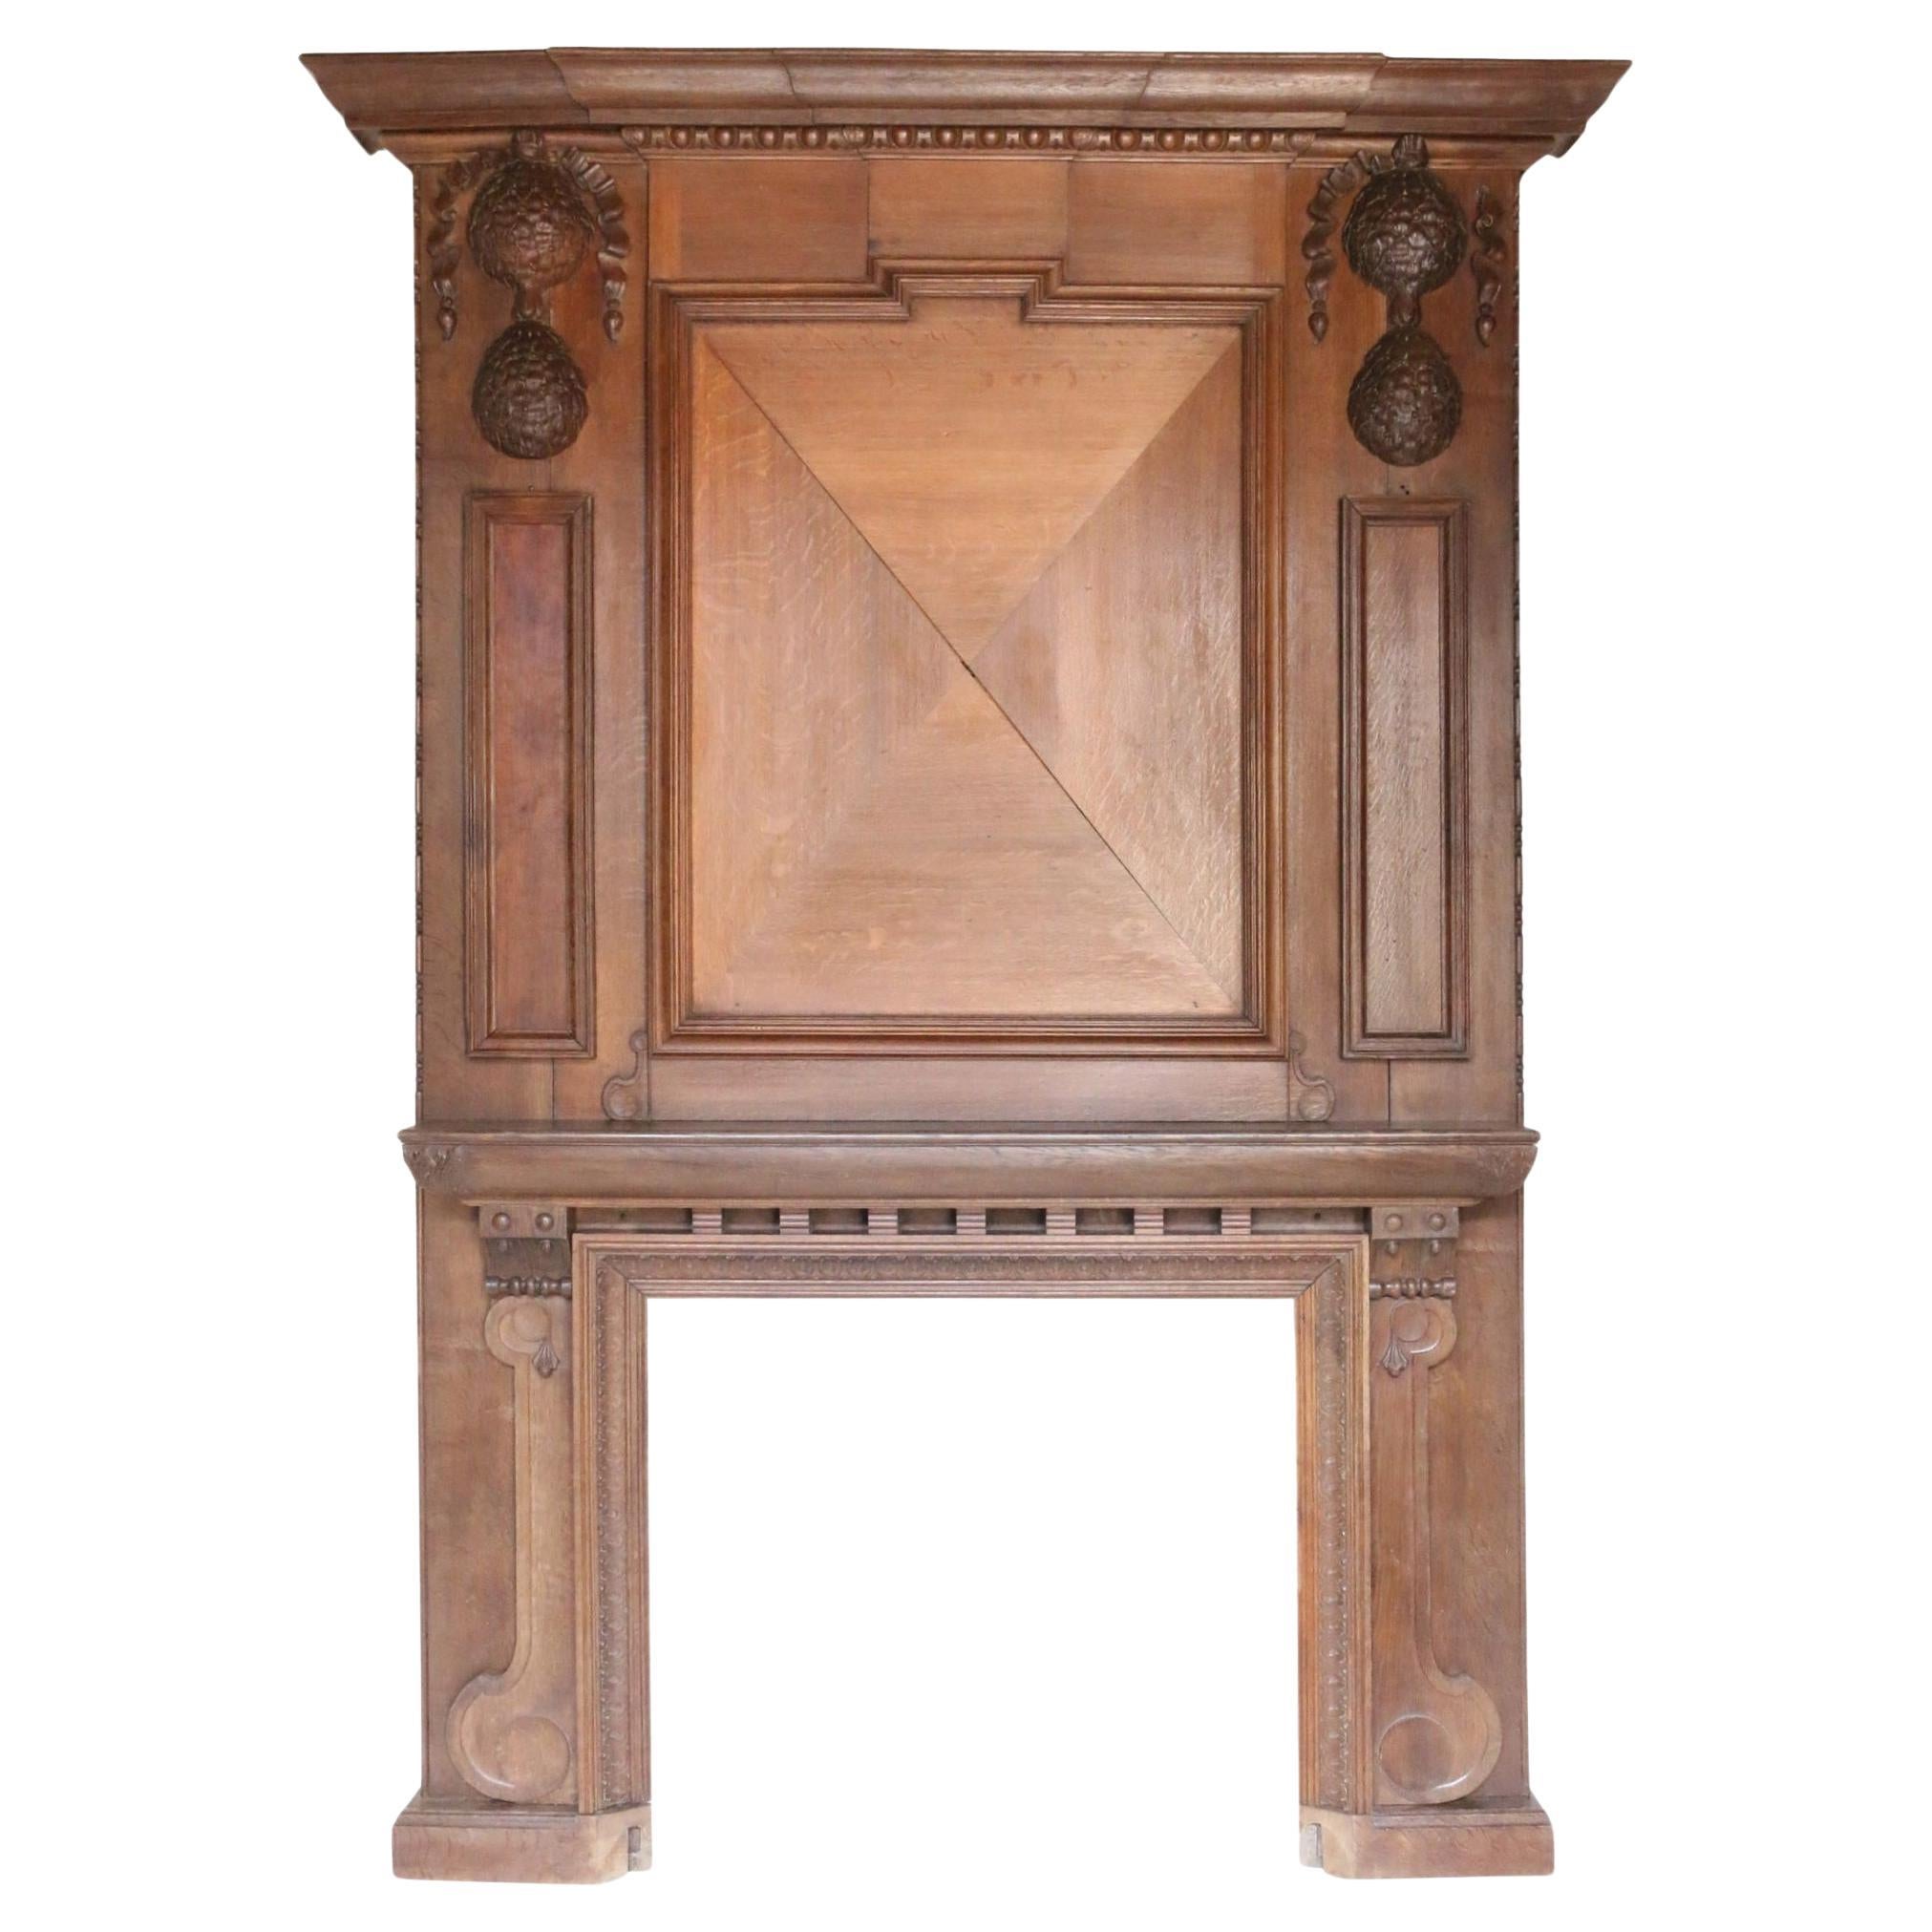 A Grand 19th Century English Oak Fire Mantel